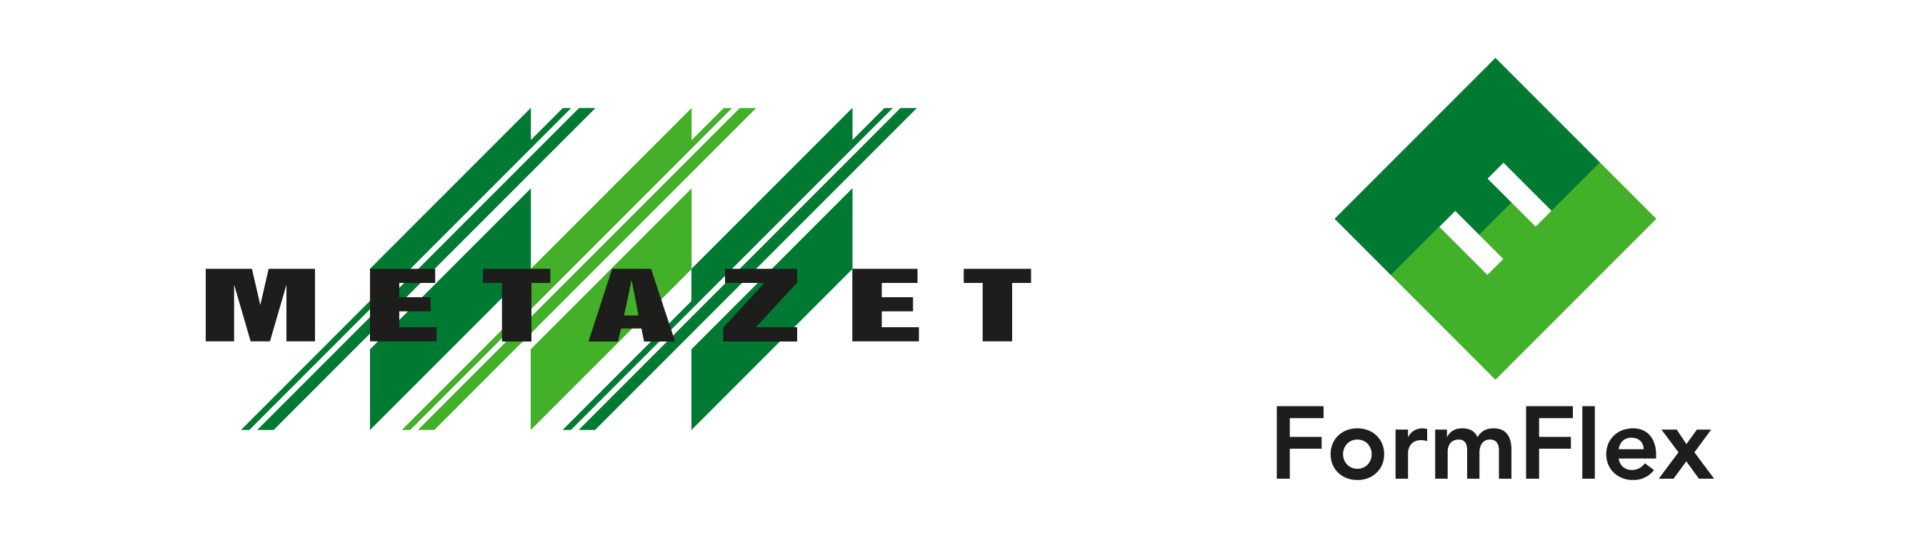 Metazet-Formflex-logo-2018-rgb